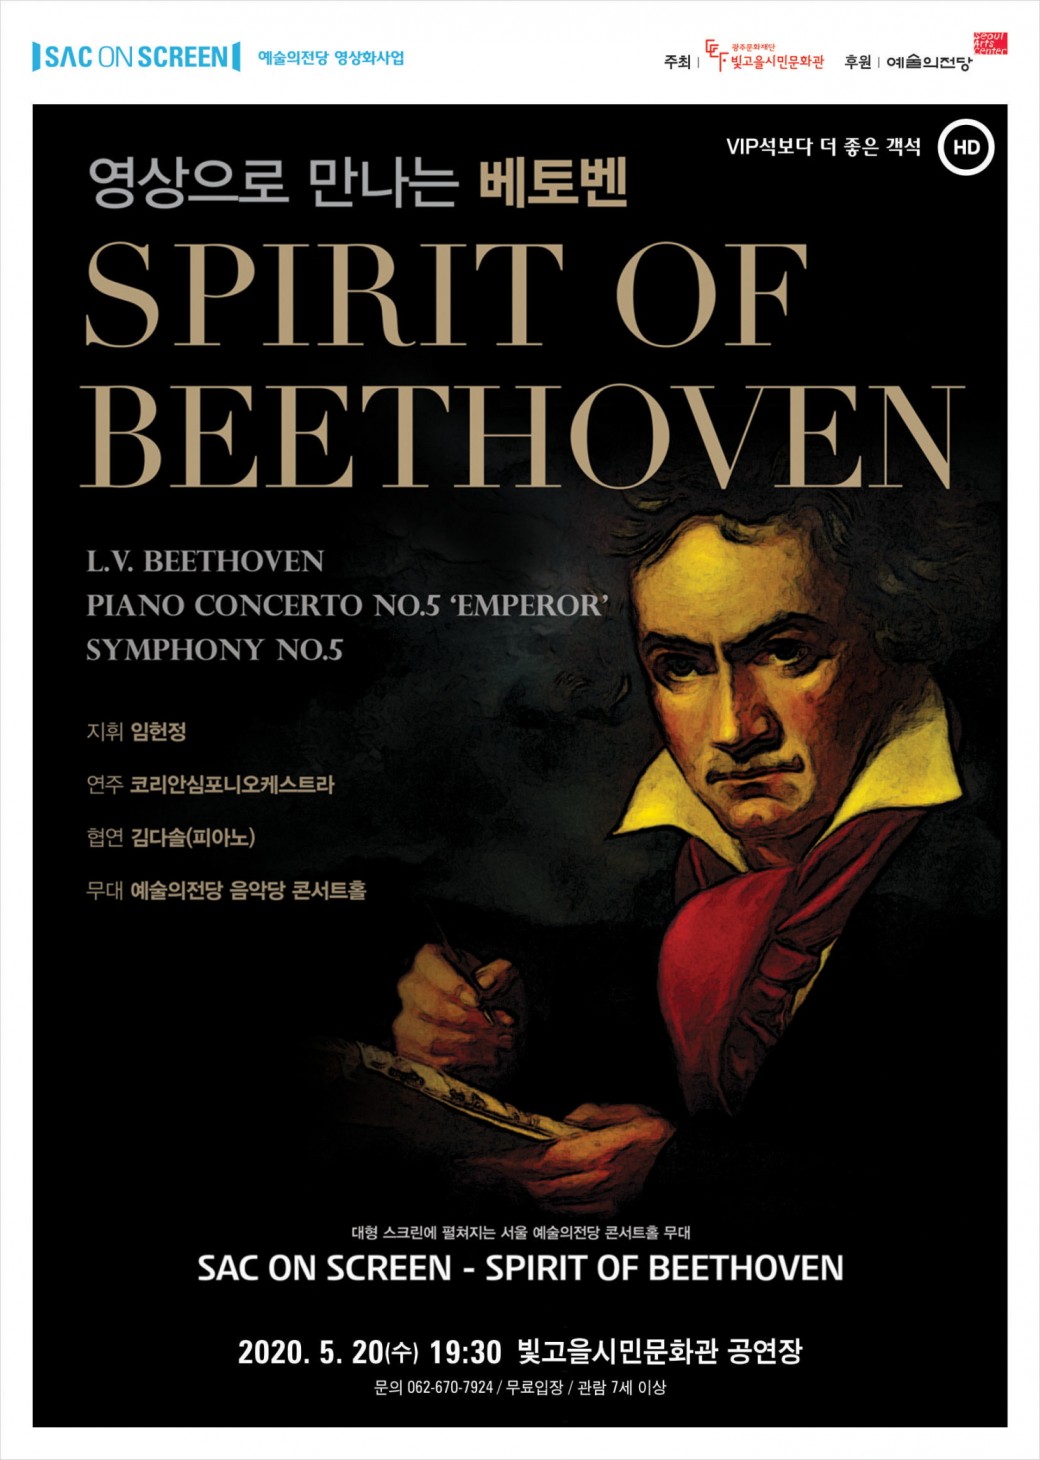 SAC ON SCREEN (Spirit of Beethoven)